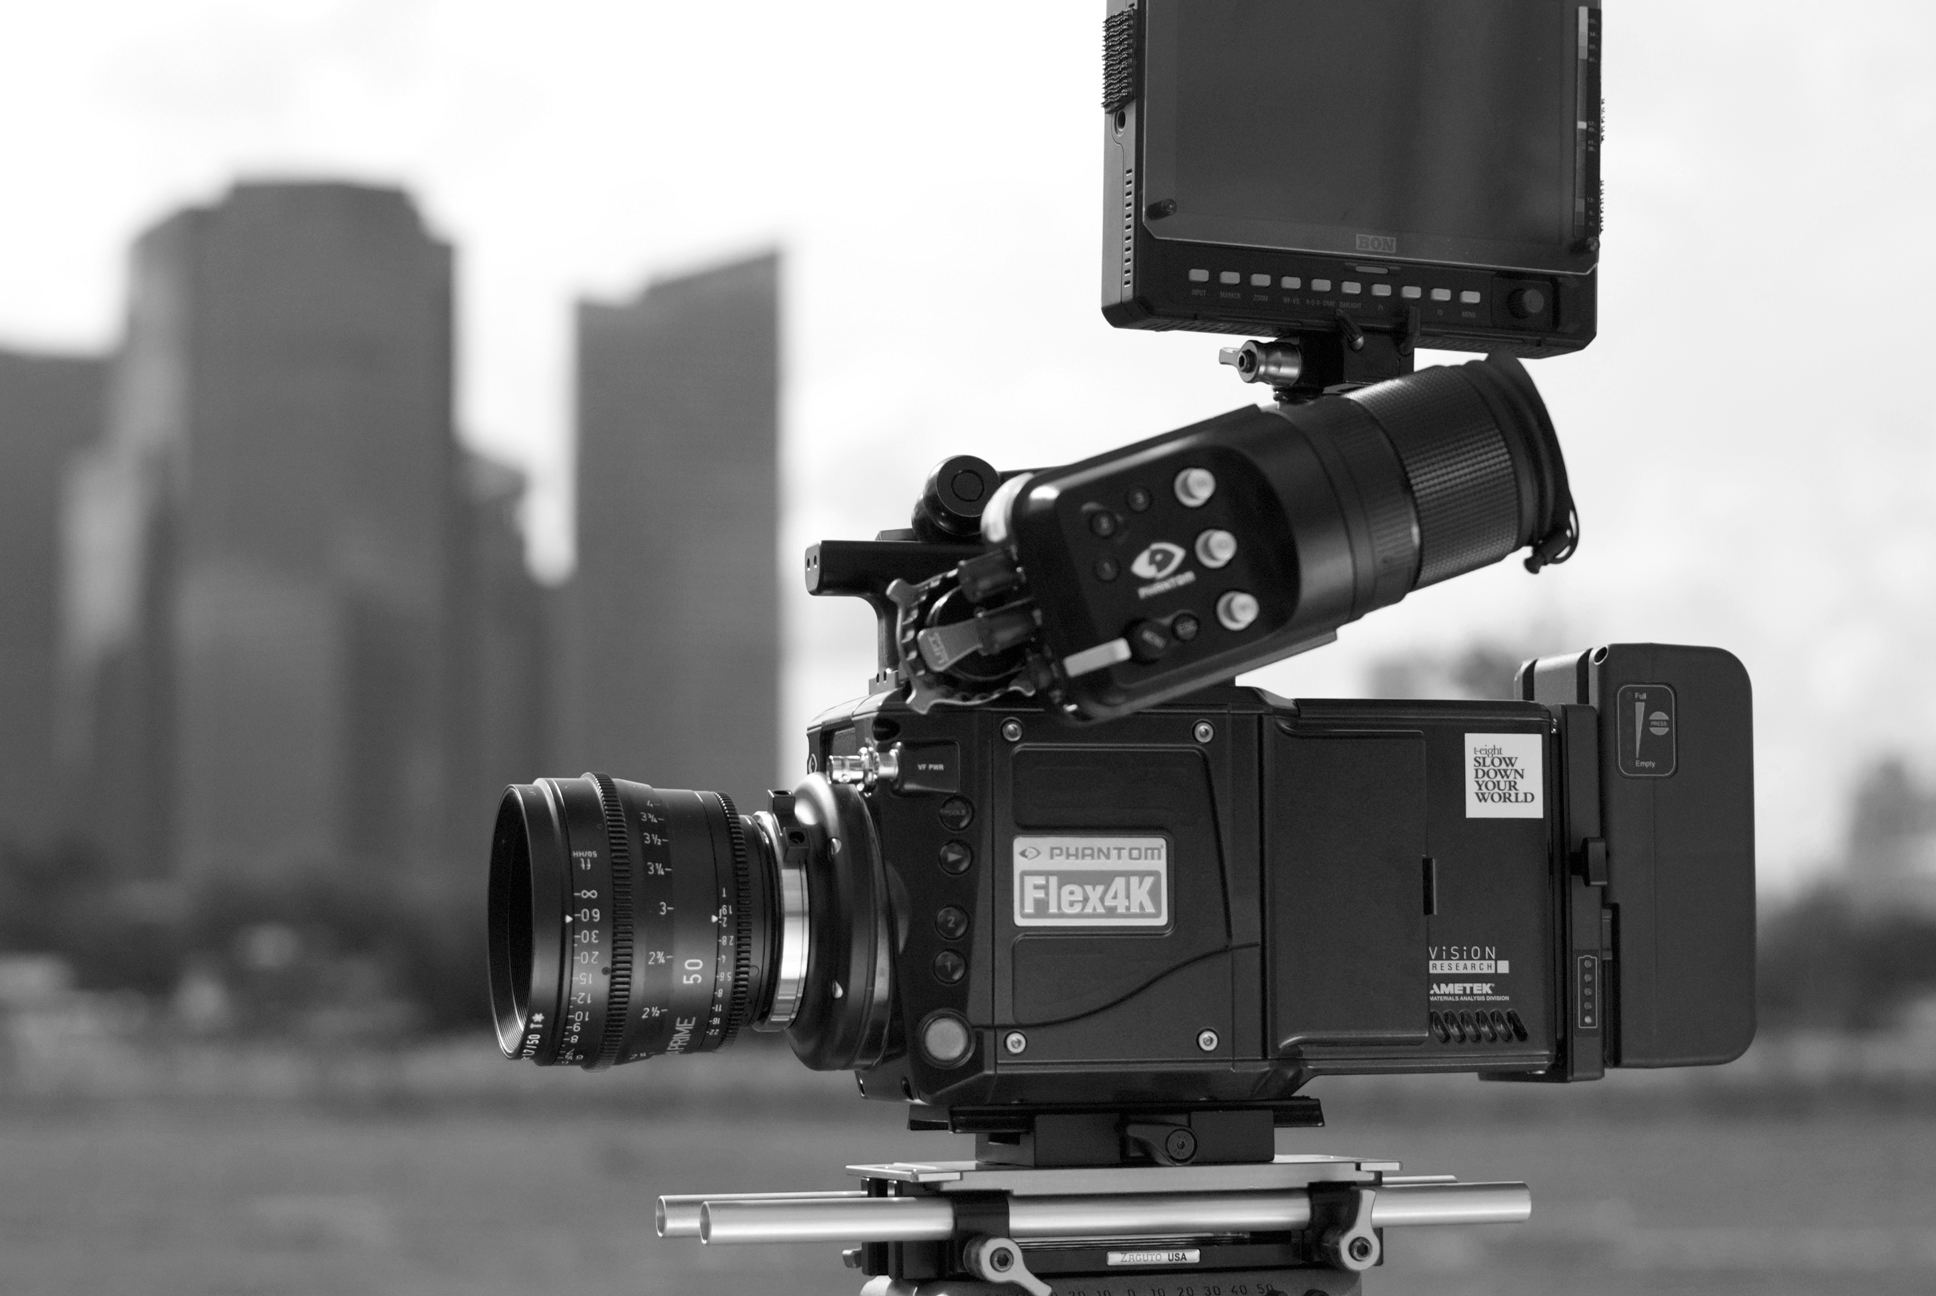 Phantom flex 4k high speed camera Rental in Singapore and Asia